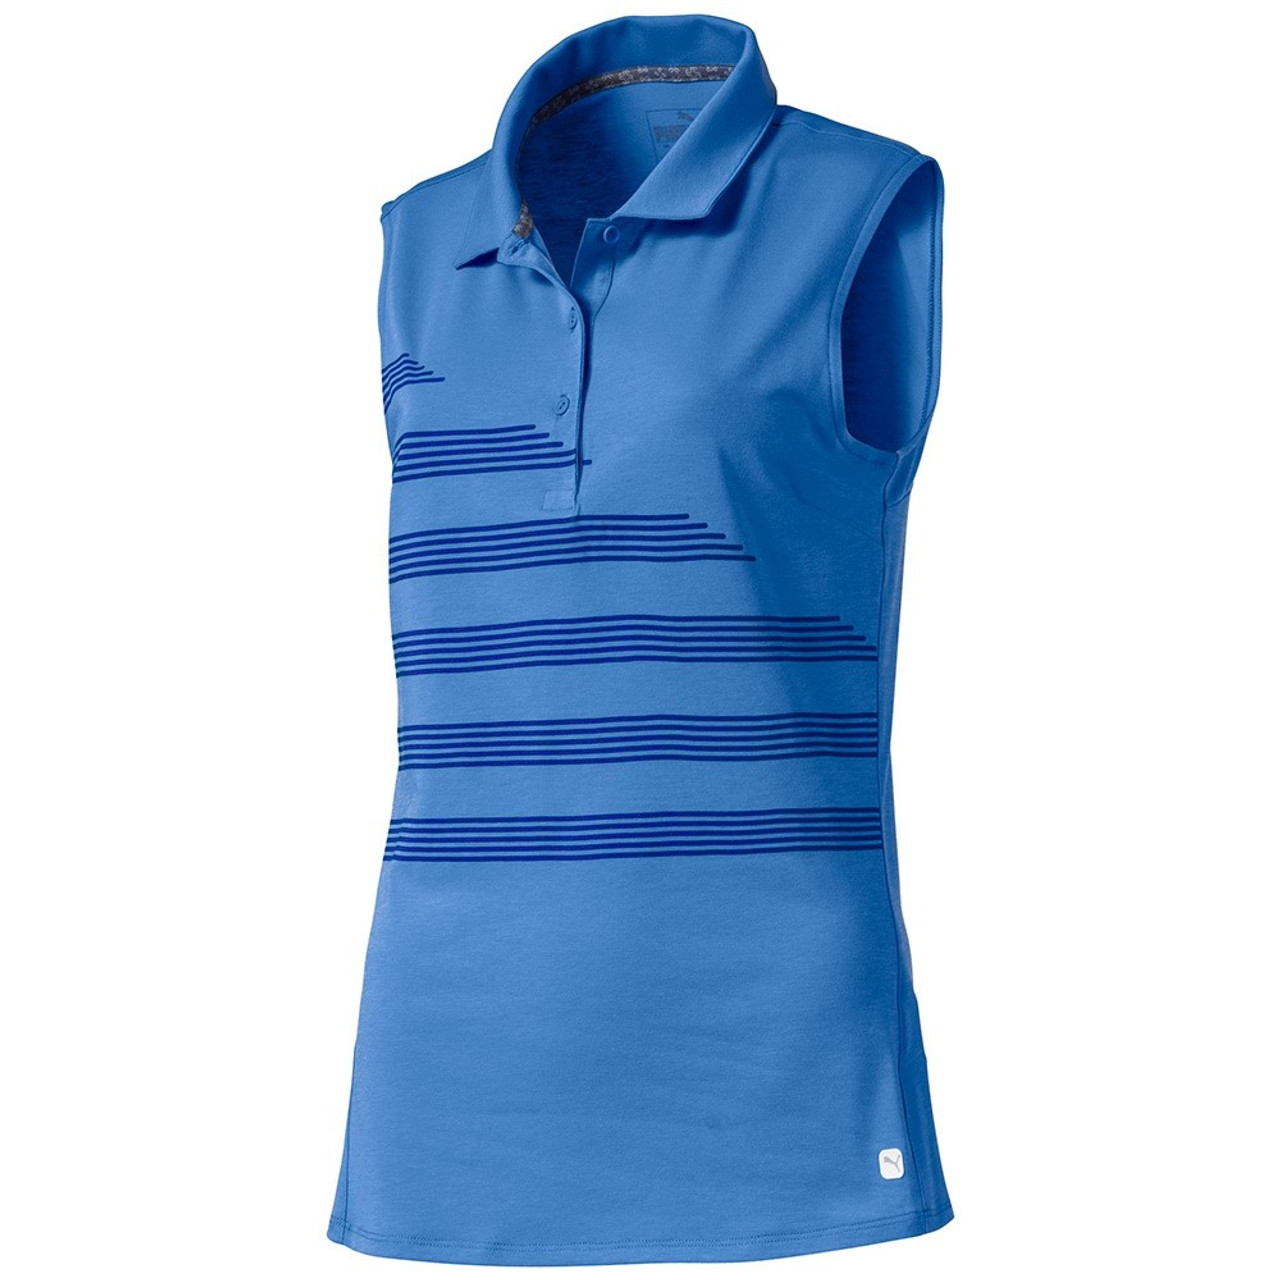 sleeveless womens golf shirts